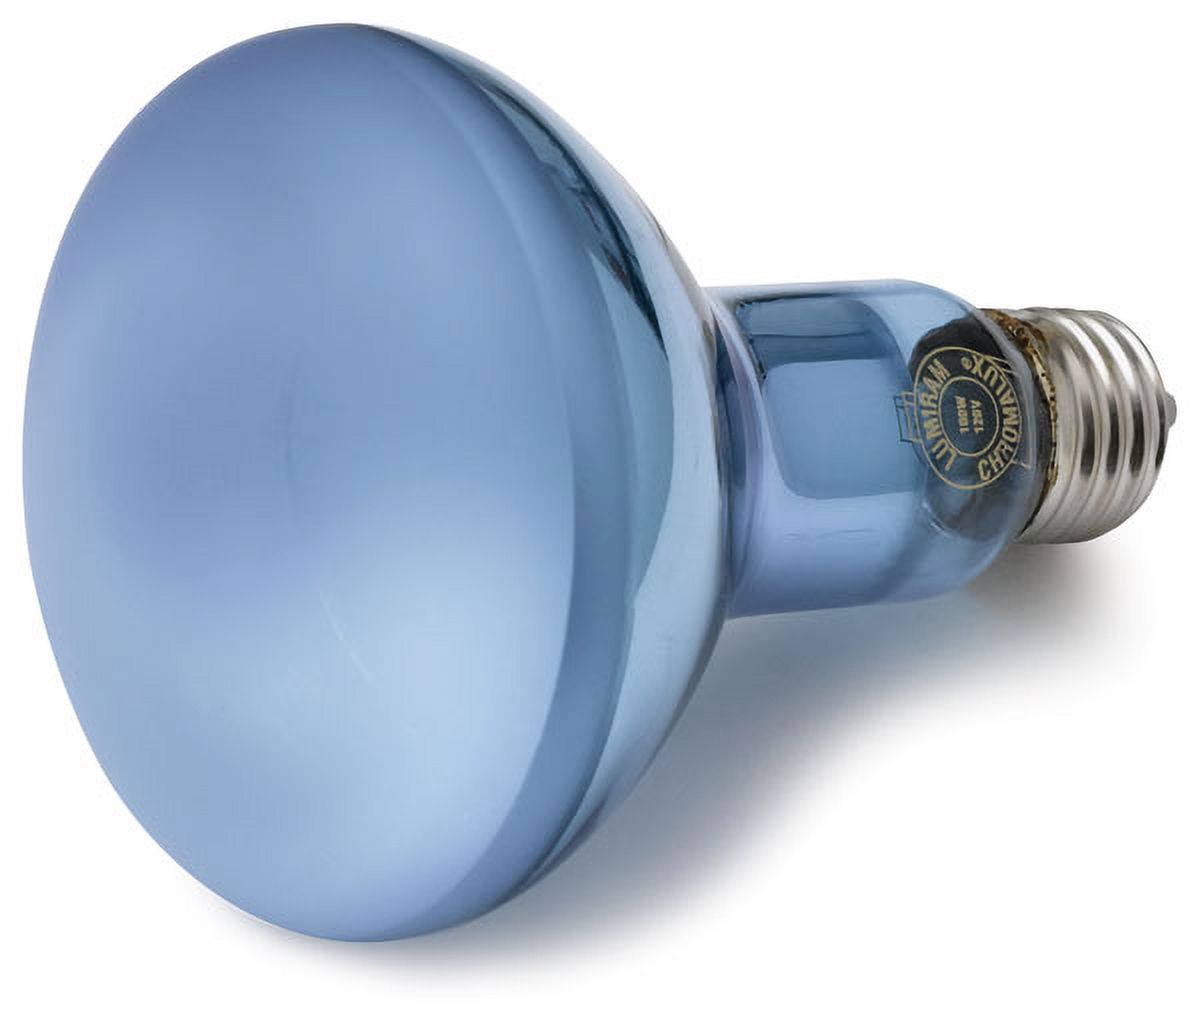 Chromalux Full Spectrum Incandescent Reflector Light Bulb - 100W - image 1 of 2